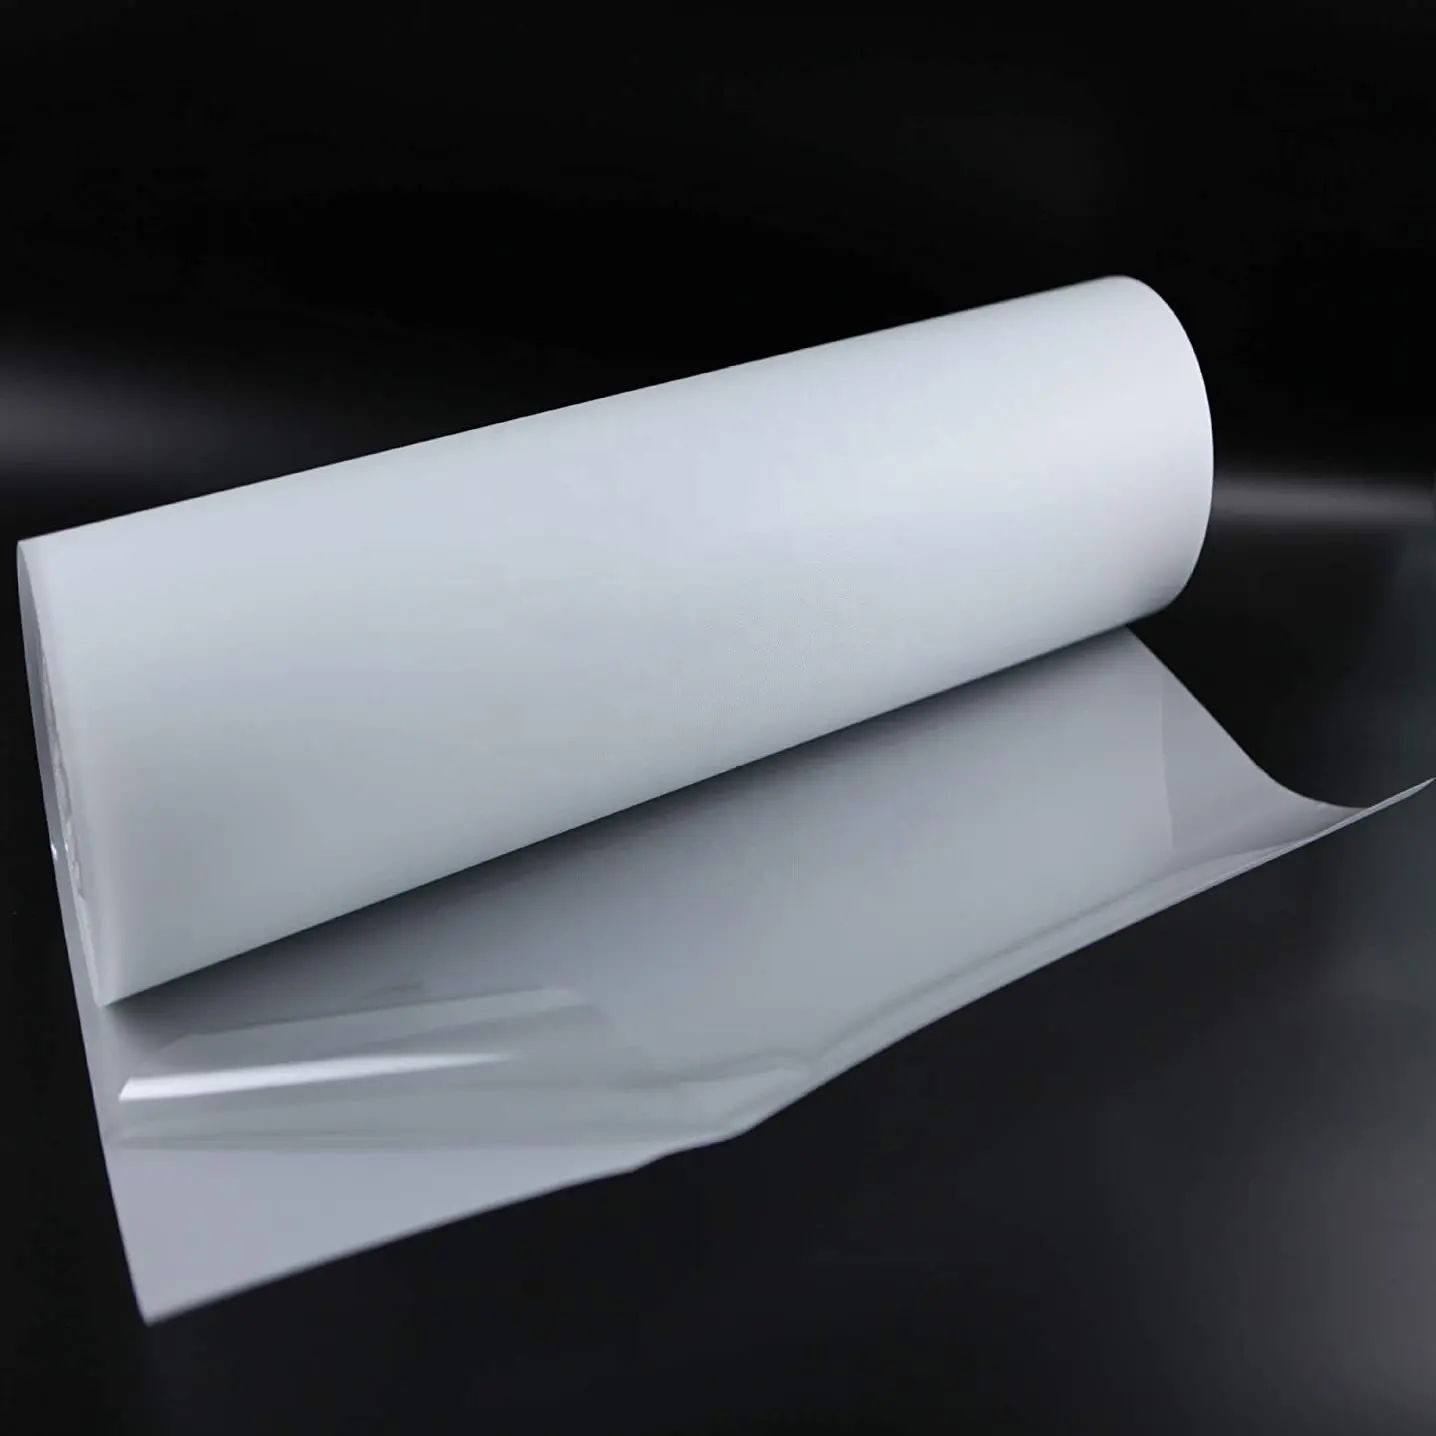 24Cm Met Witte Wale Pp Film Siliconen Zelfklevende Hot Fix Tape Steentjes Kleverige Overdracht Film Papierrol